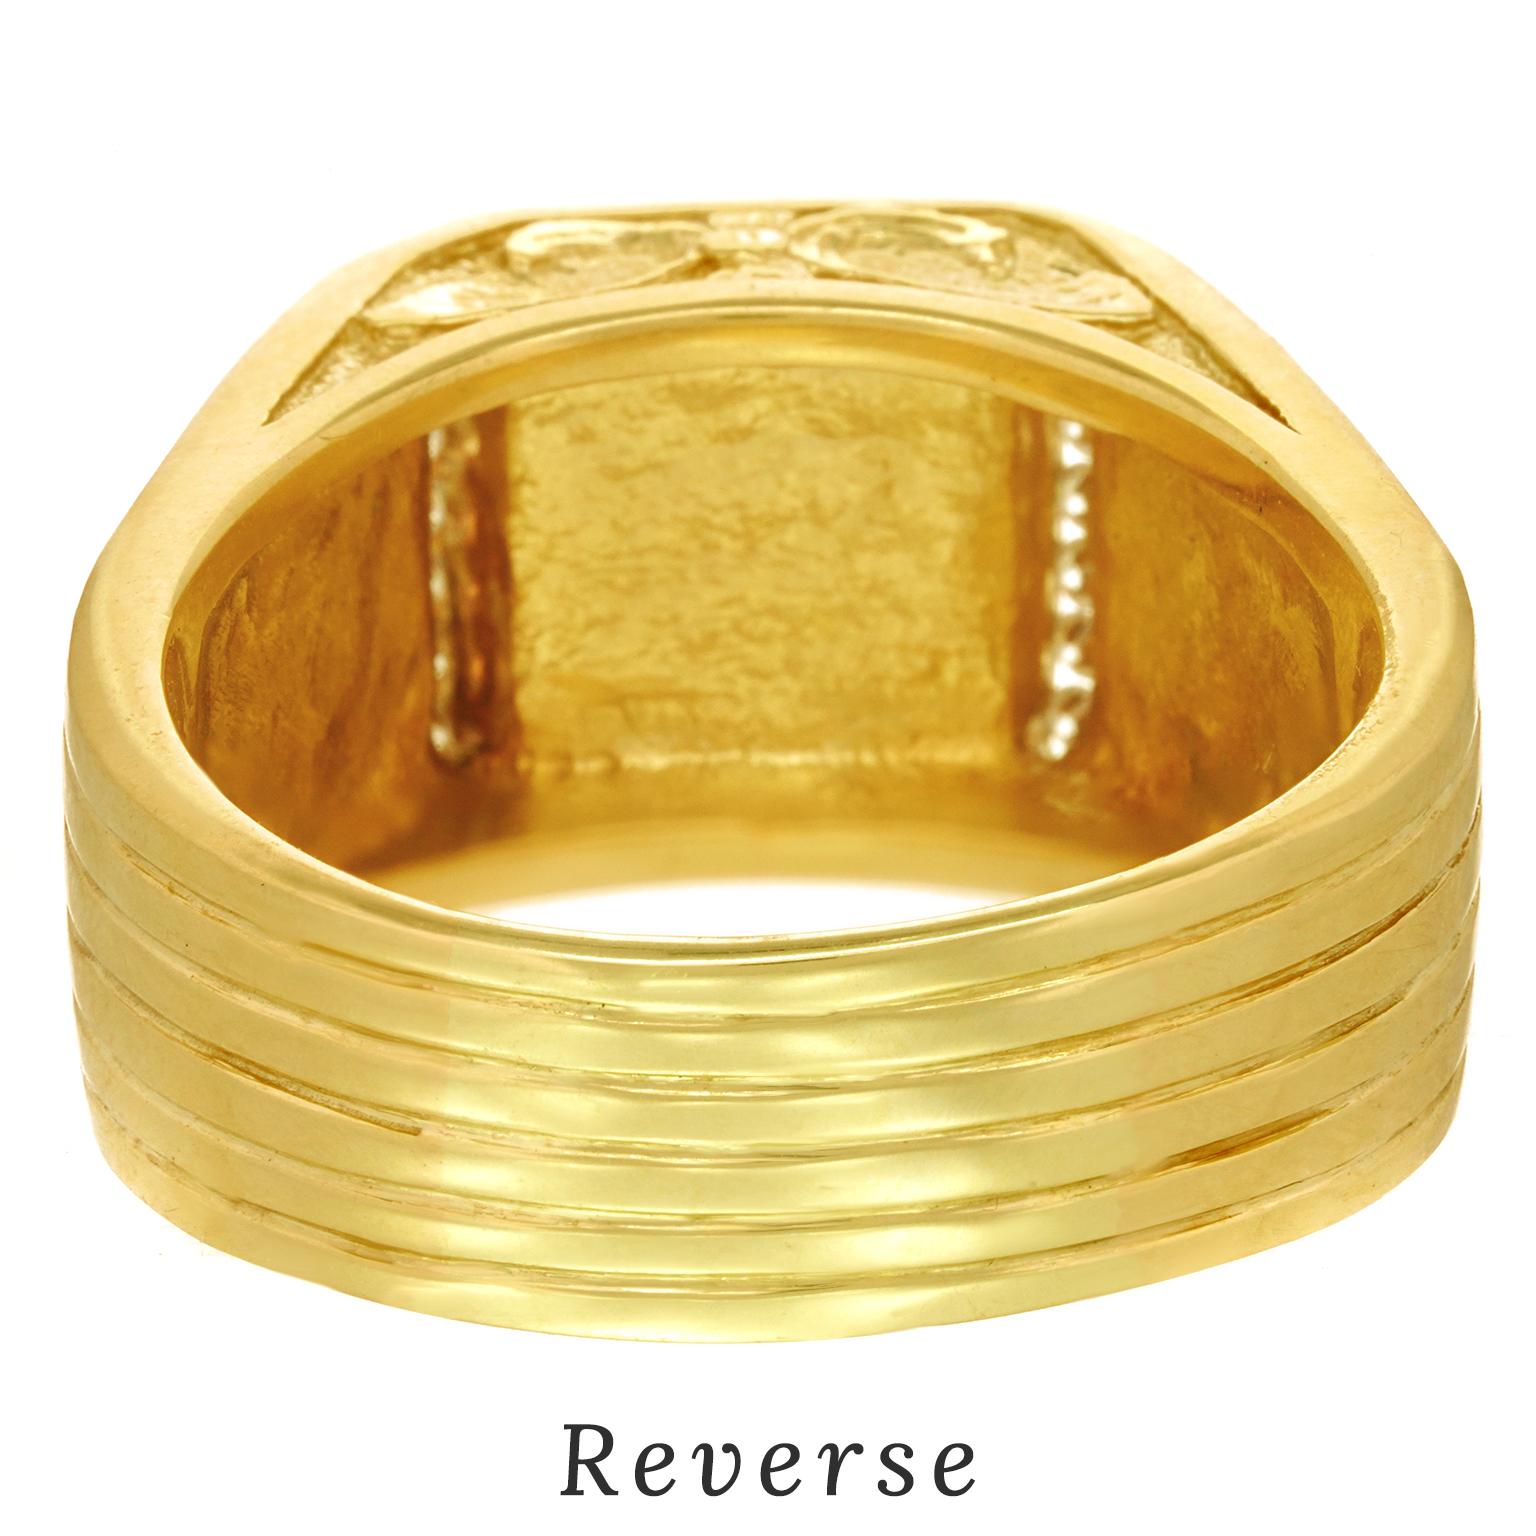 Massive Renaissance Revival Gold Ring 7